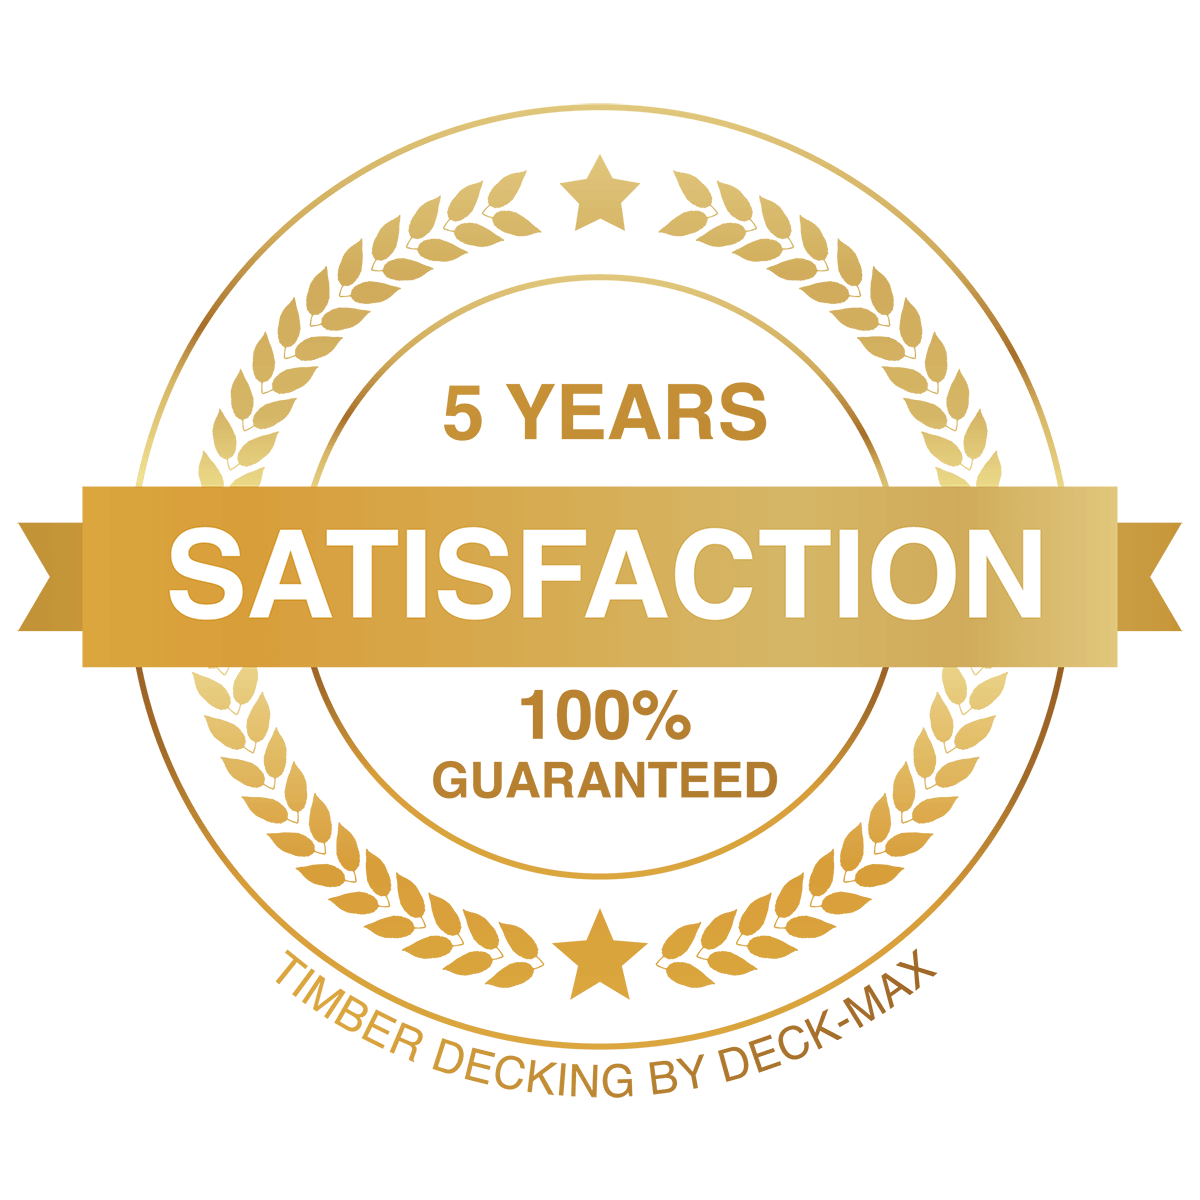 5 Years Satisfaction 100% Guaranteed